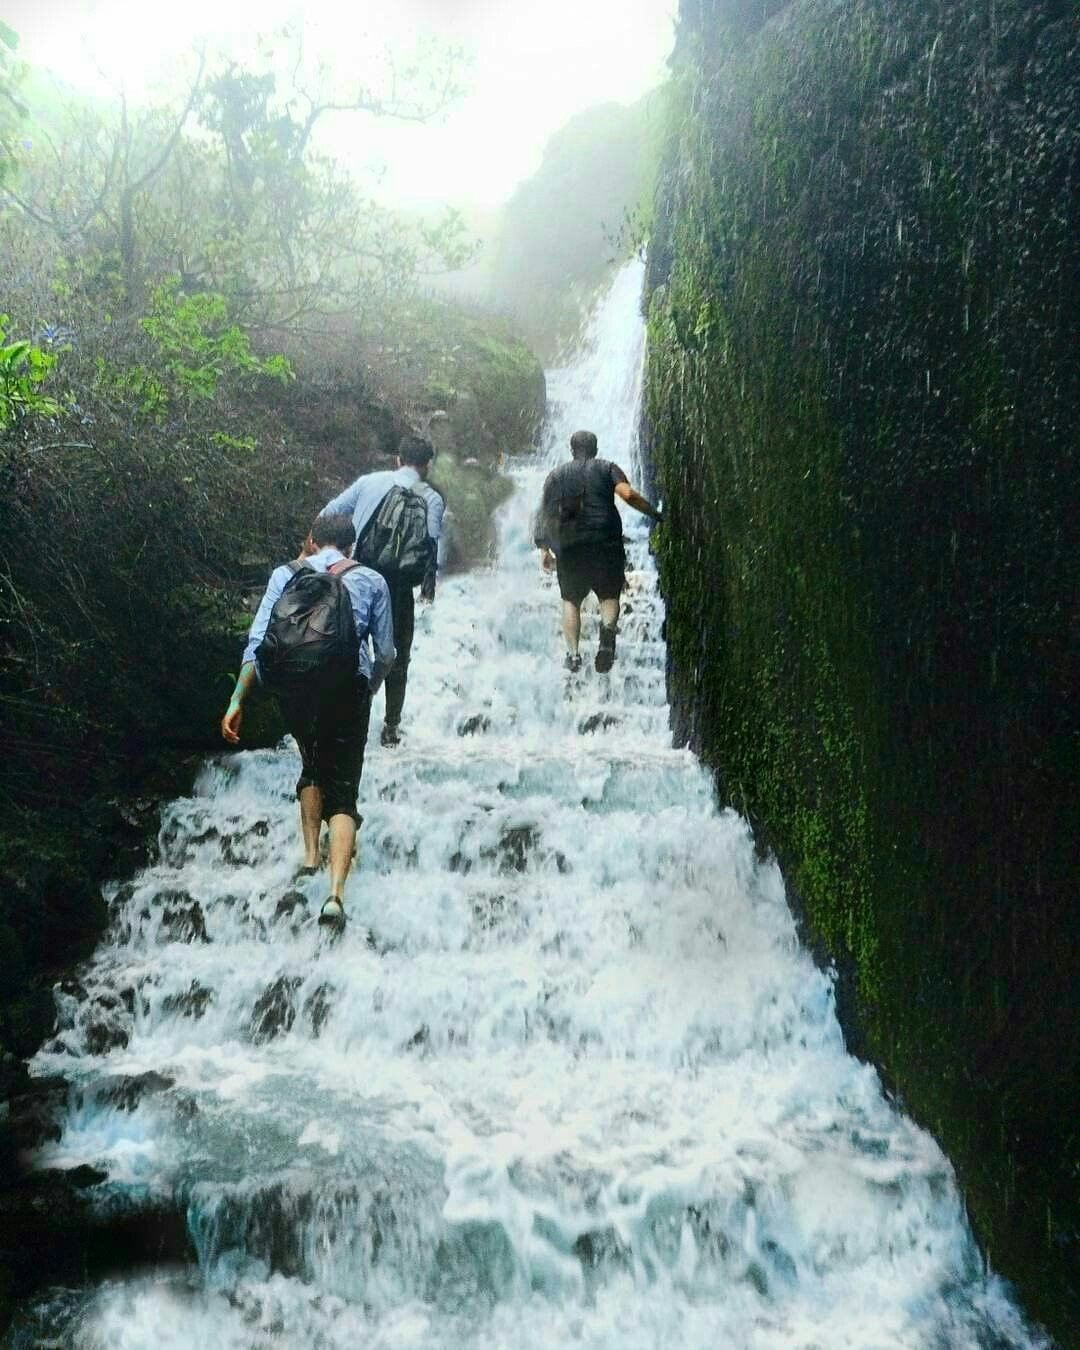 visapur fort in monsoon